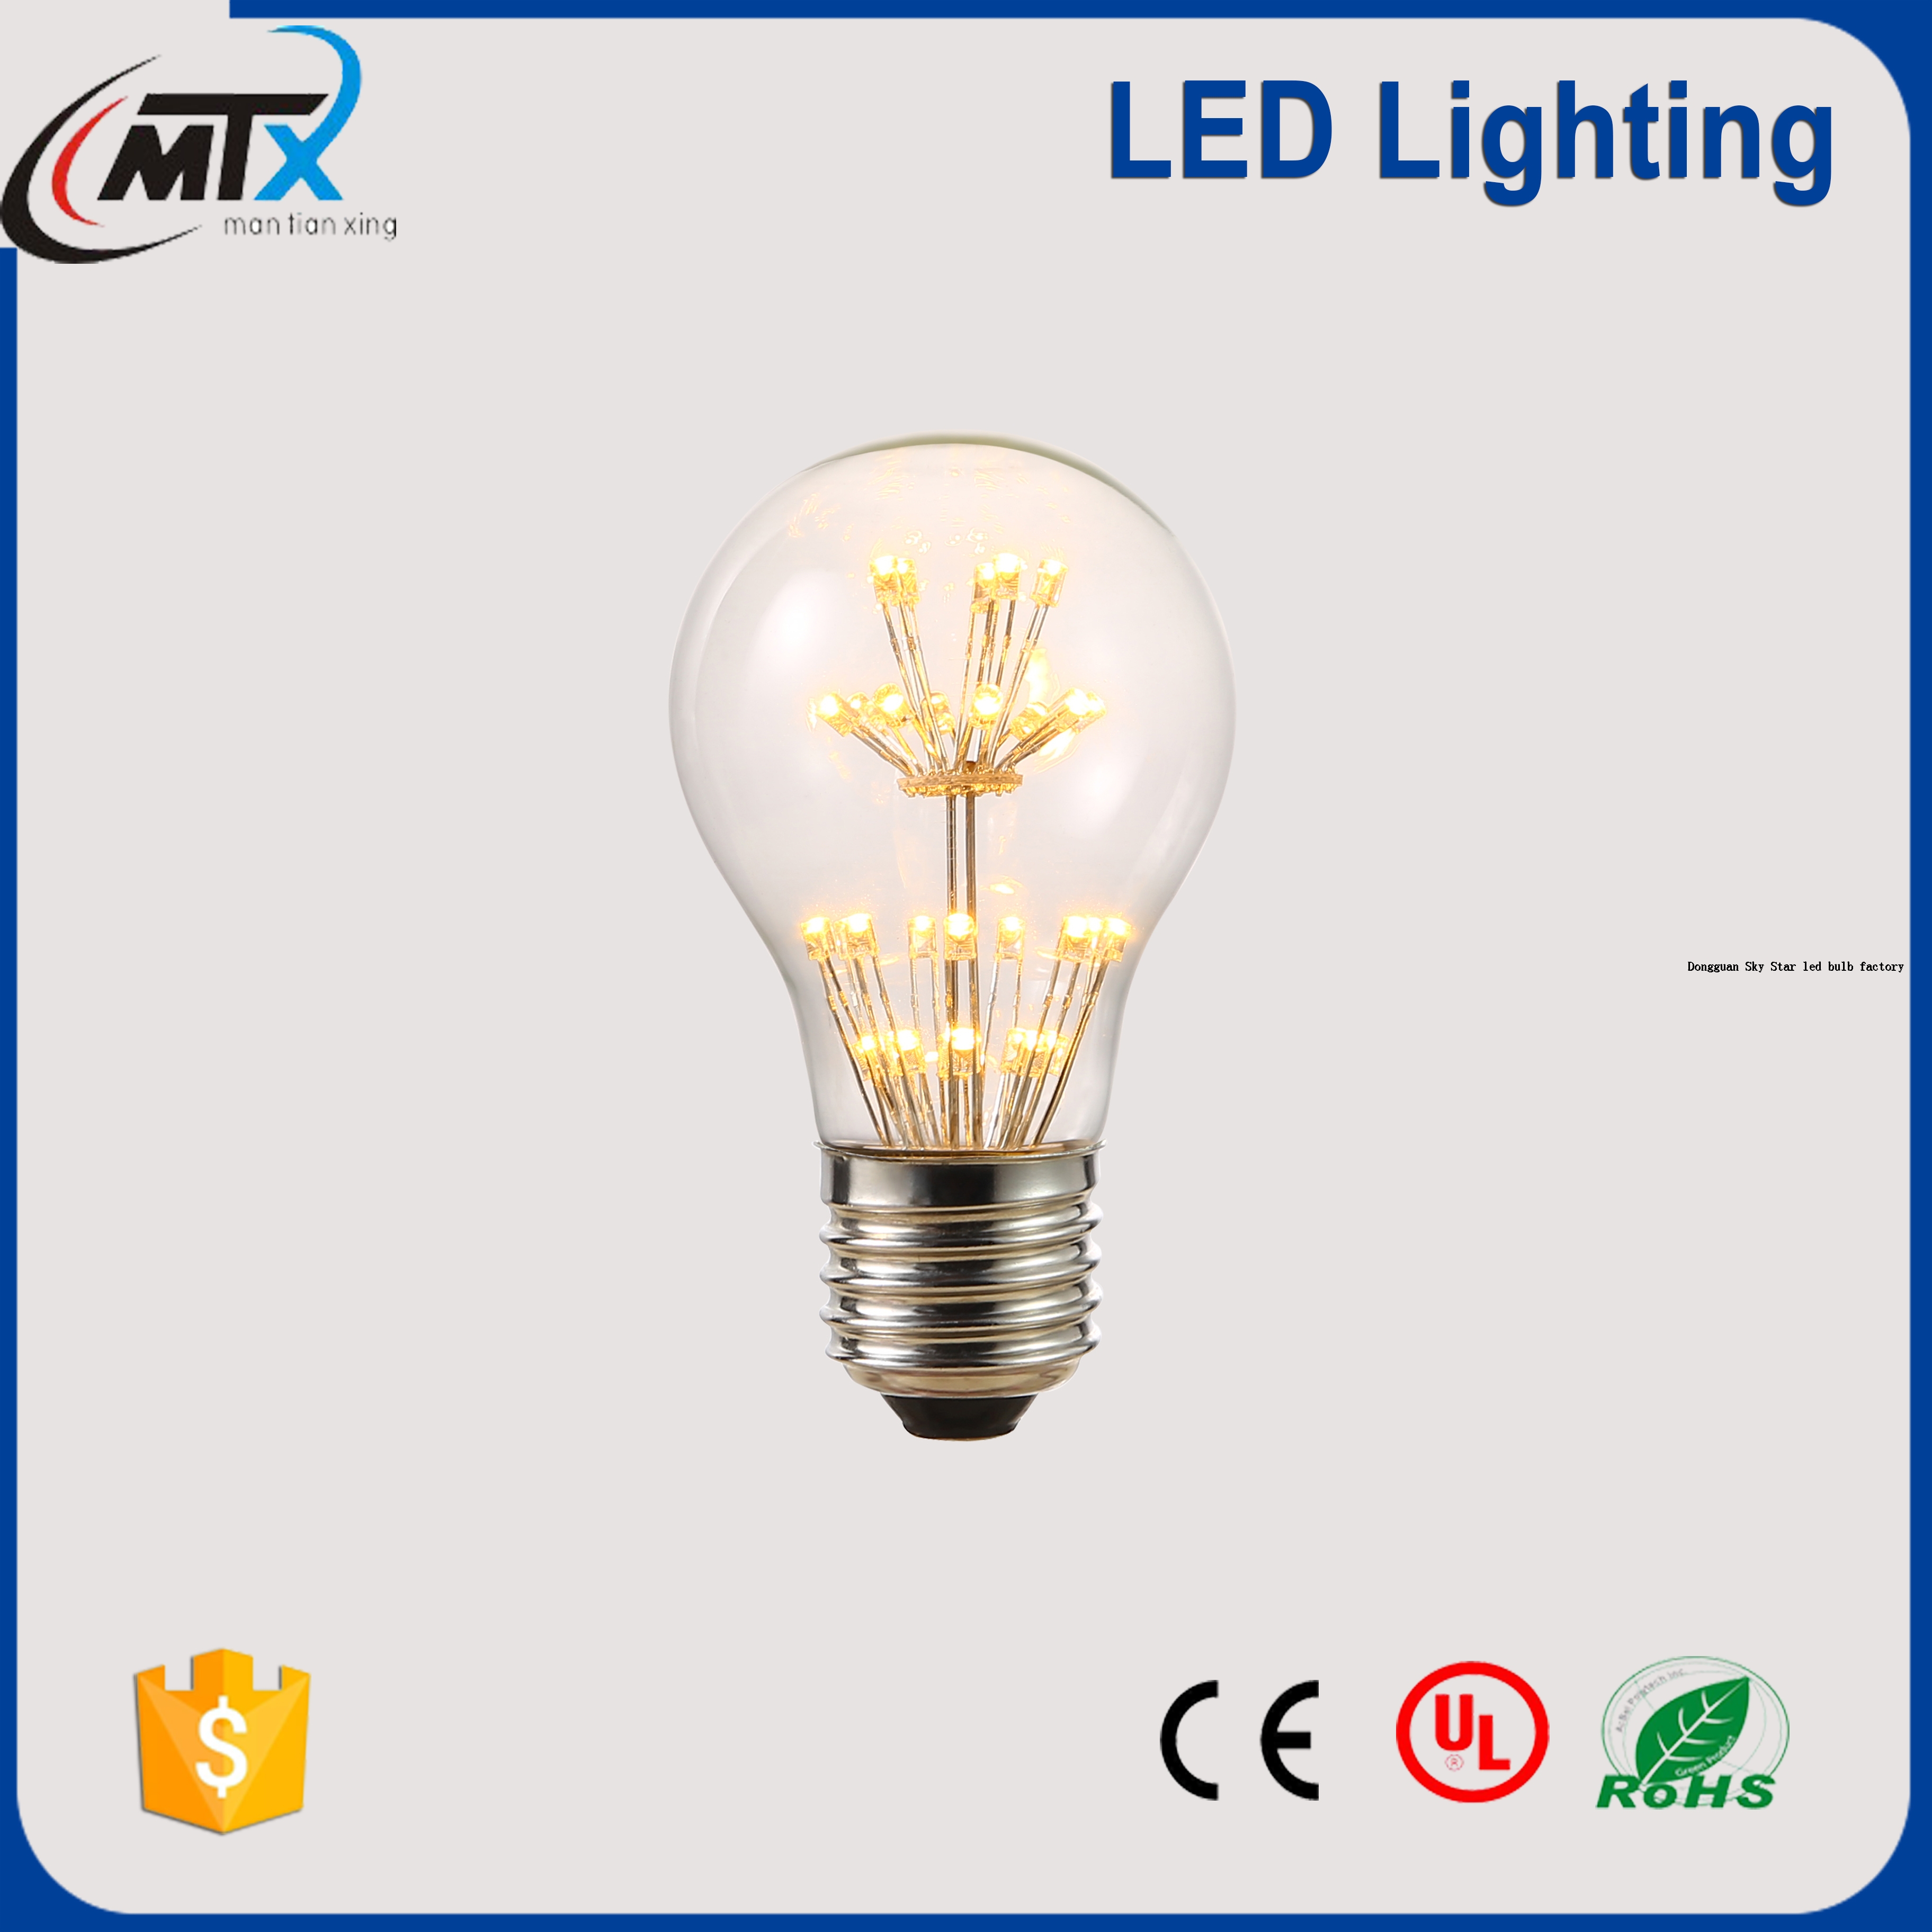 LED Ceiling led lighting bulb MTX-A19